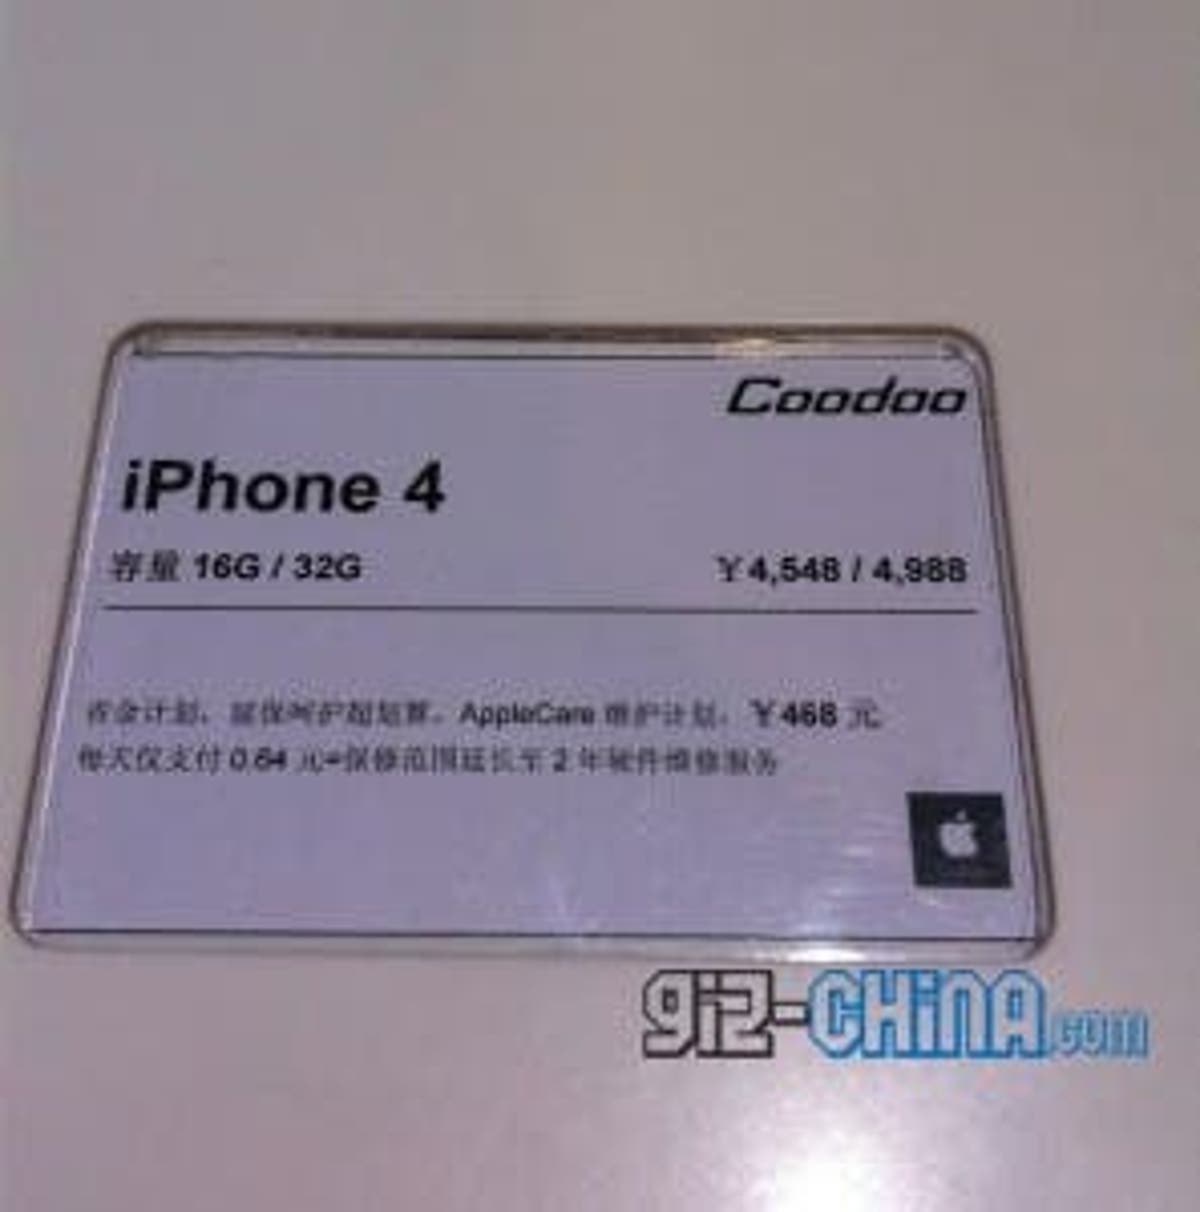 Iphone 4 Price Drop Gizchina Com